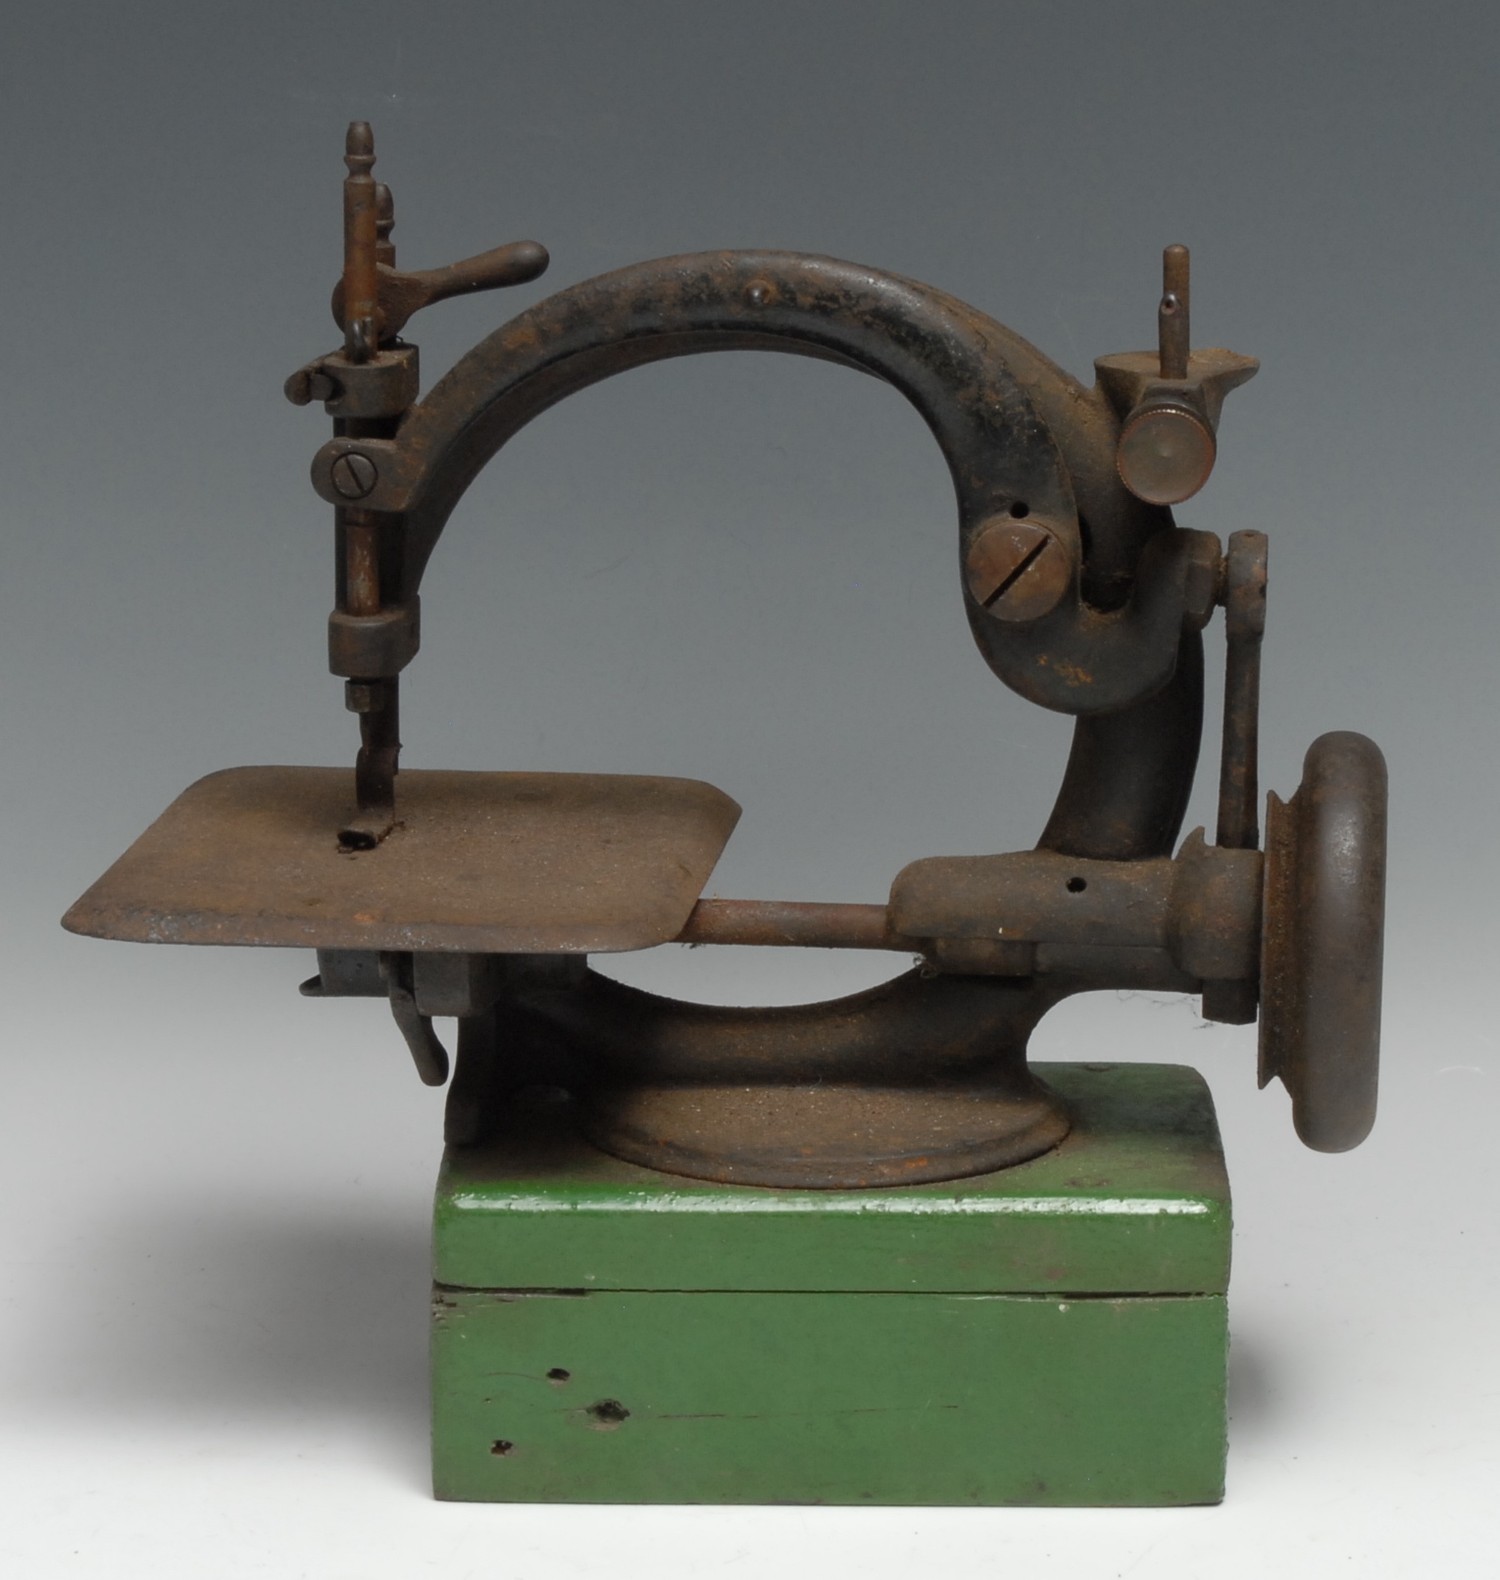 A 19th century C-frame sewing machine, 26.5cm wide